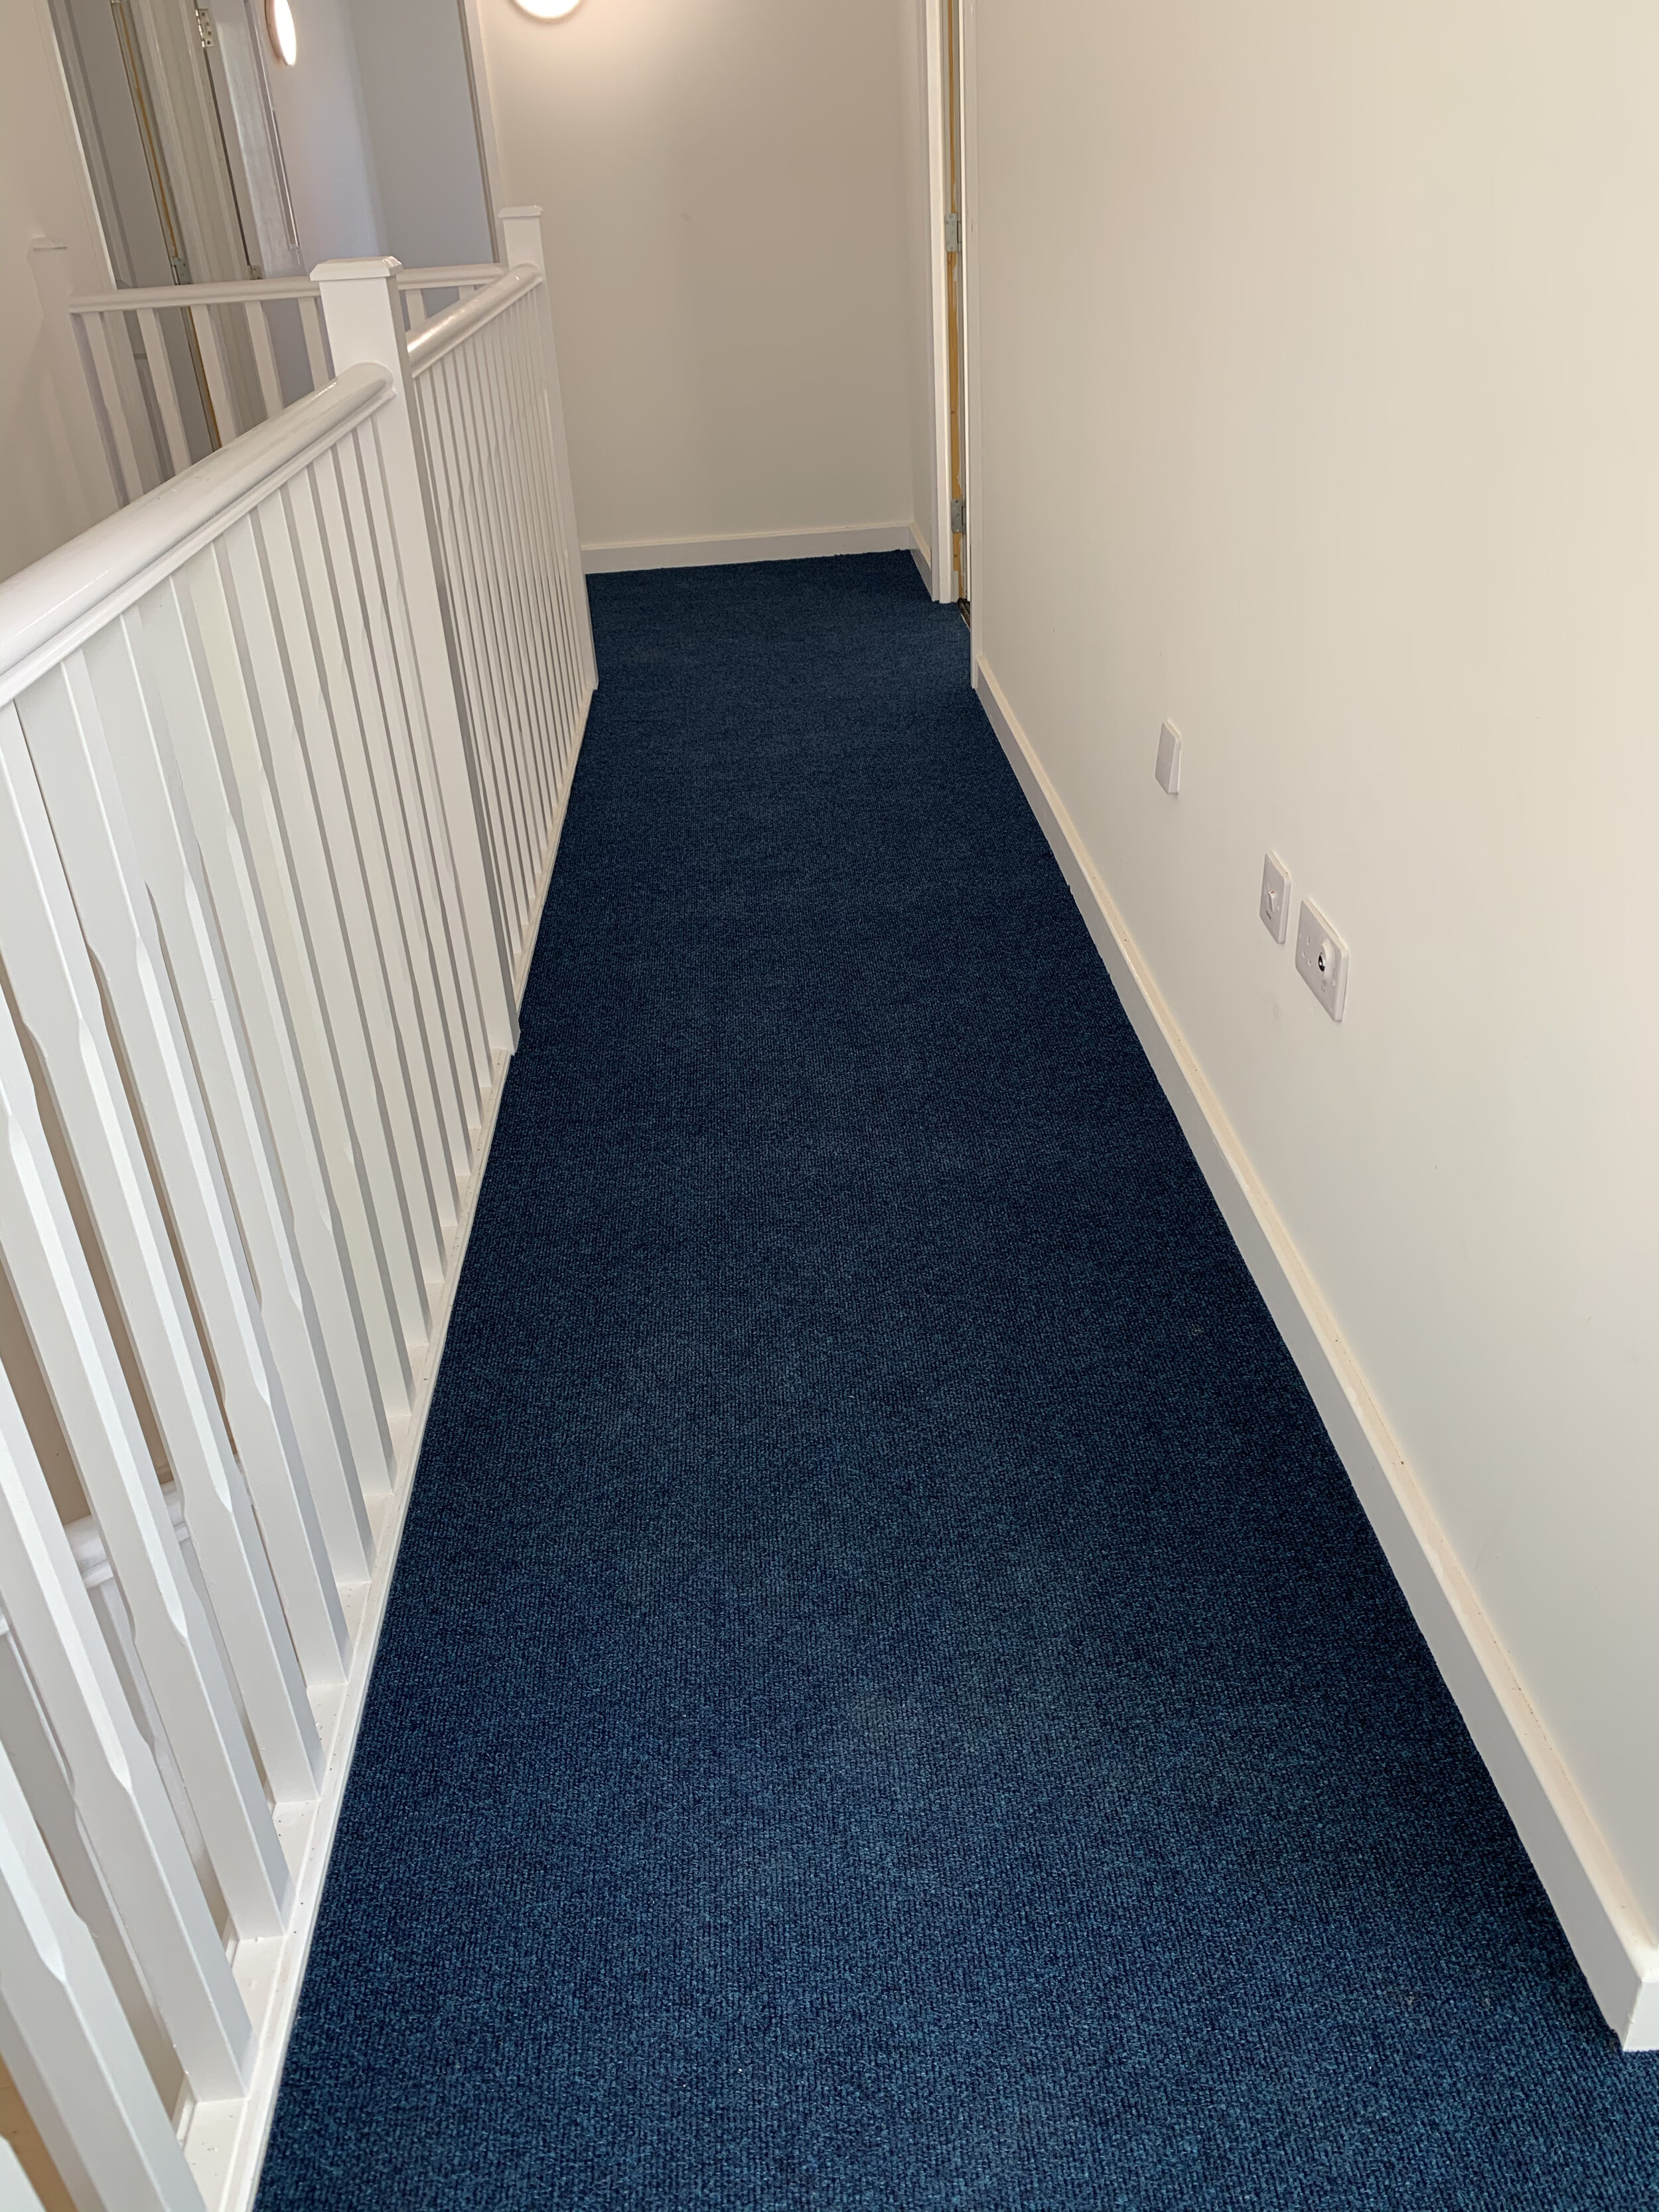 Chevenham Court hallway carpet.jpg